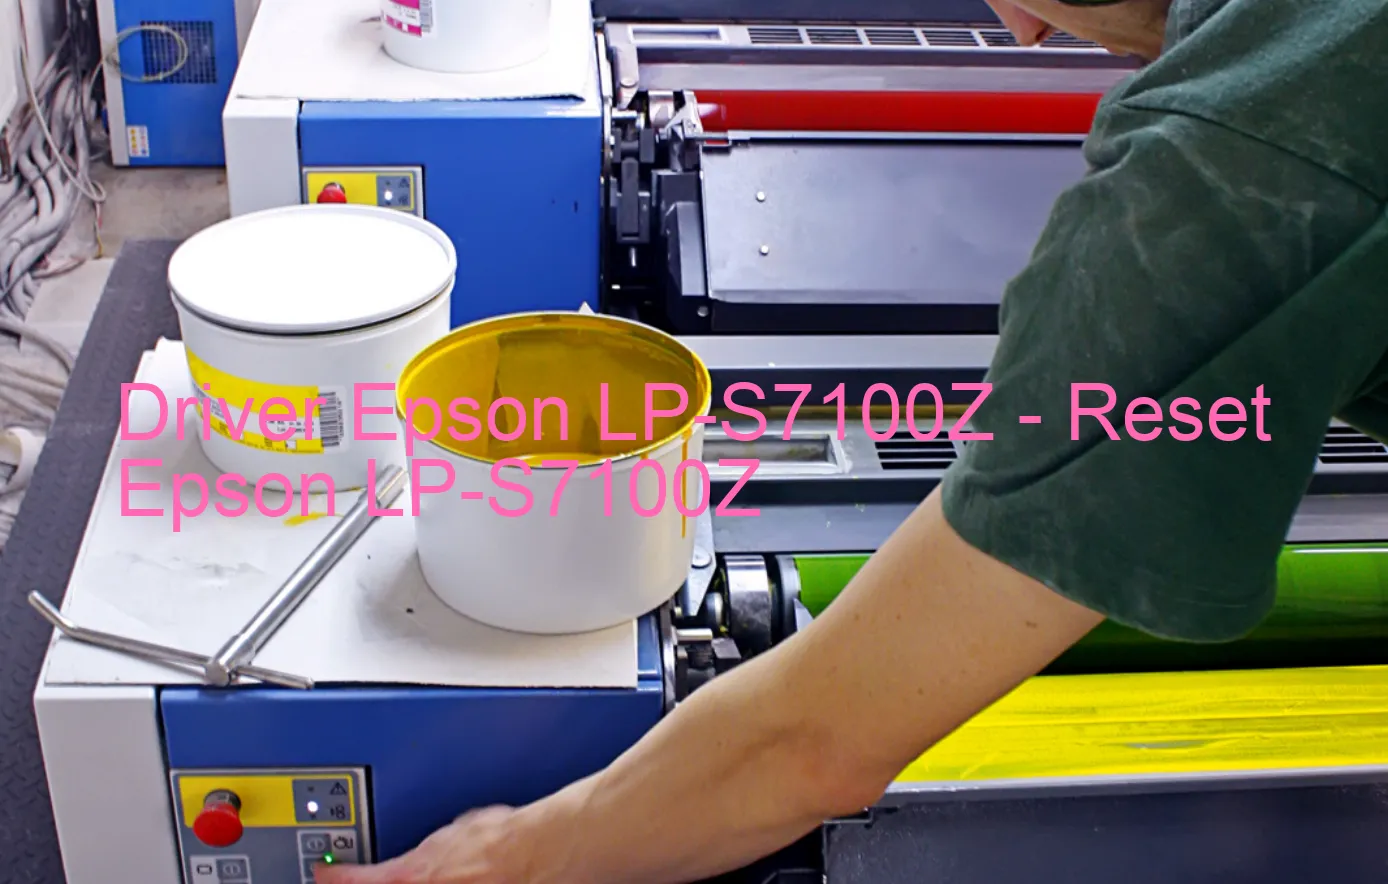 Epson LP-S7100Zのドライバー、Epson LP-S7100Zのリセットソフトウェア